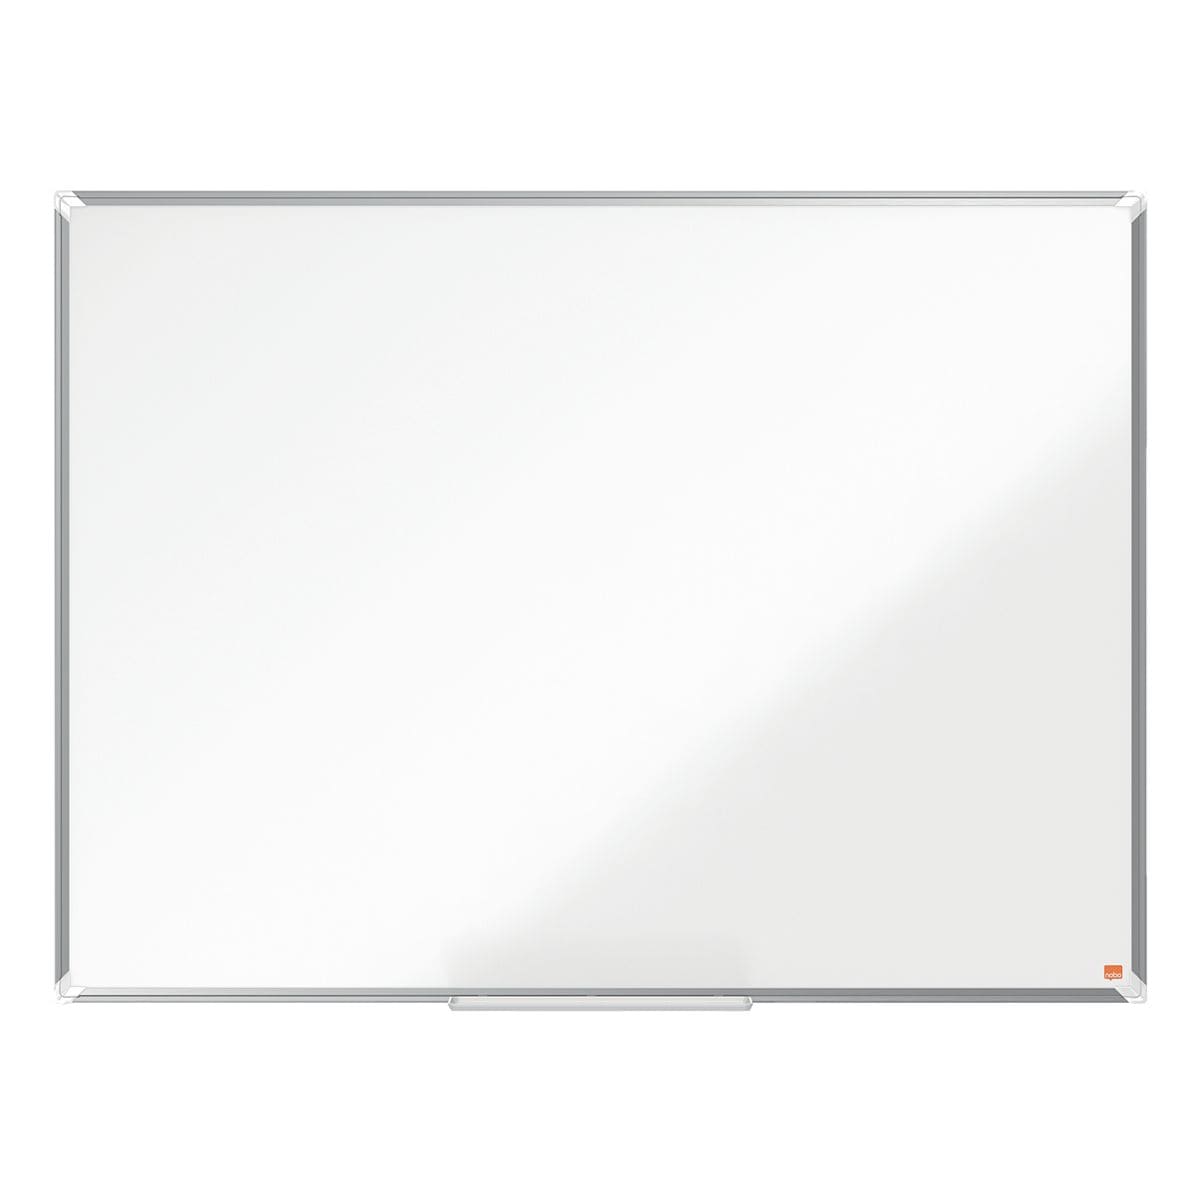 Nobo Whiteboard Premium Plus spezialbeschichtet, 120x90 cm